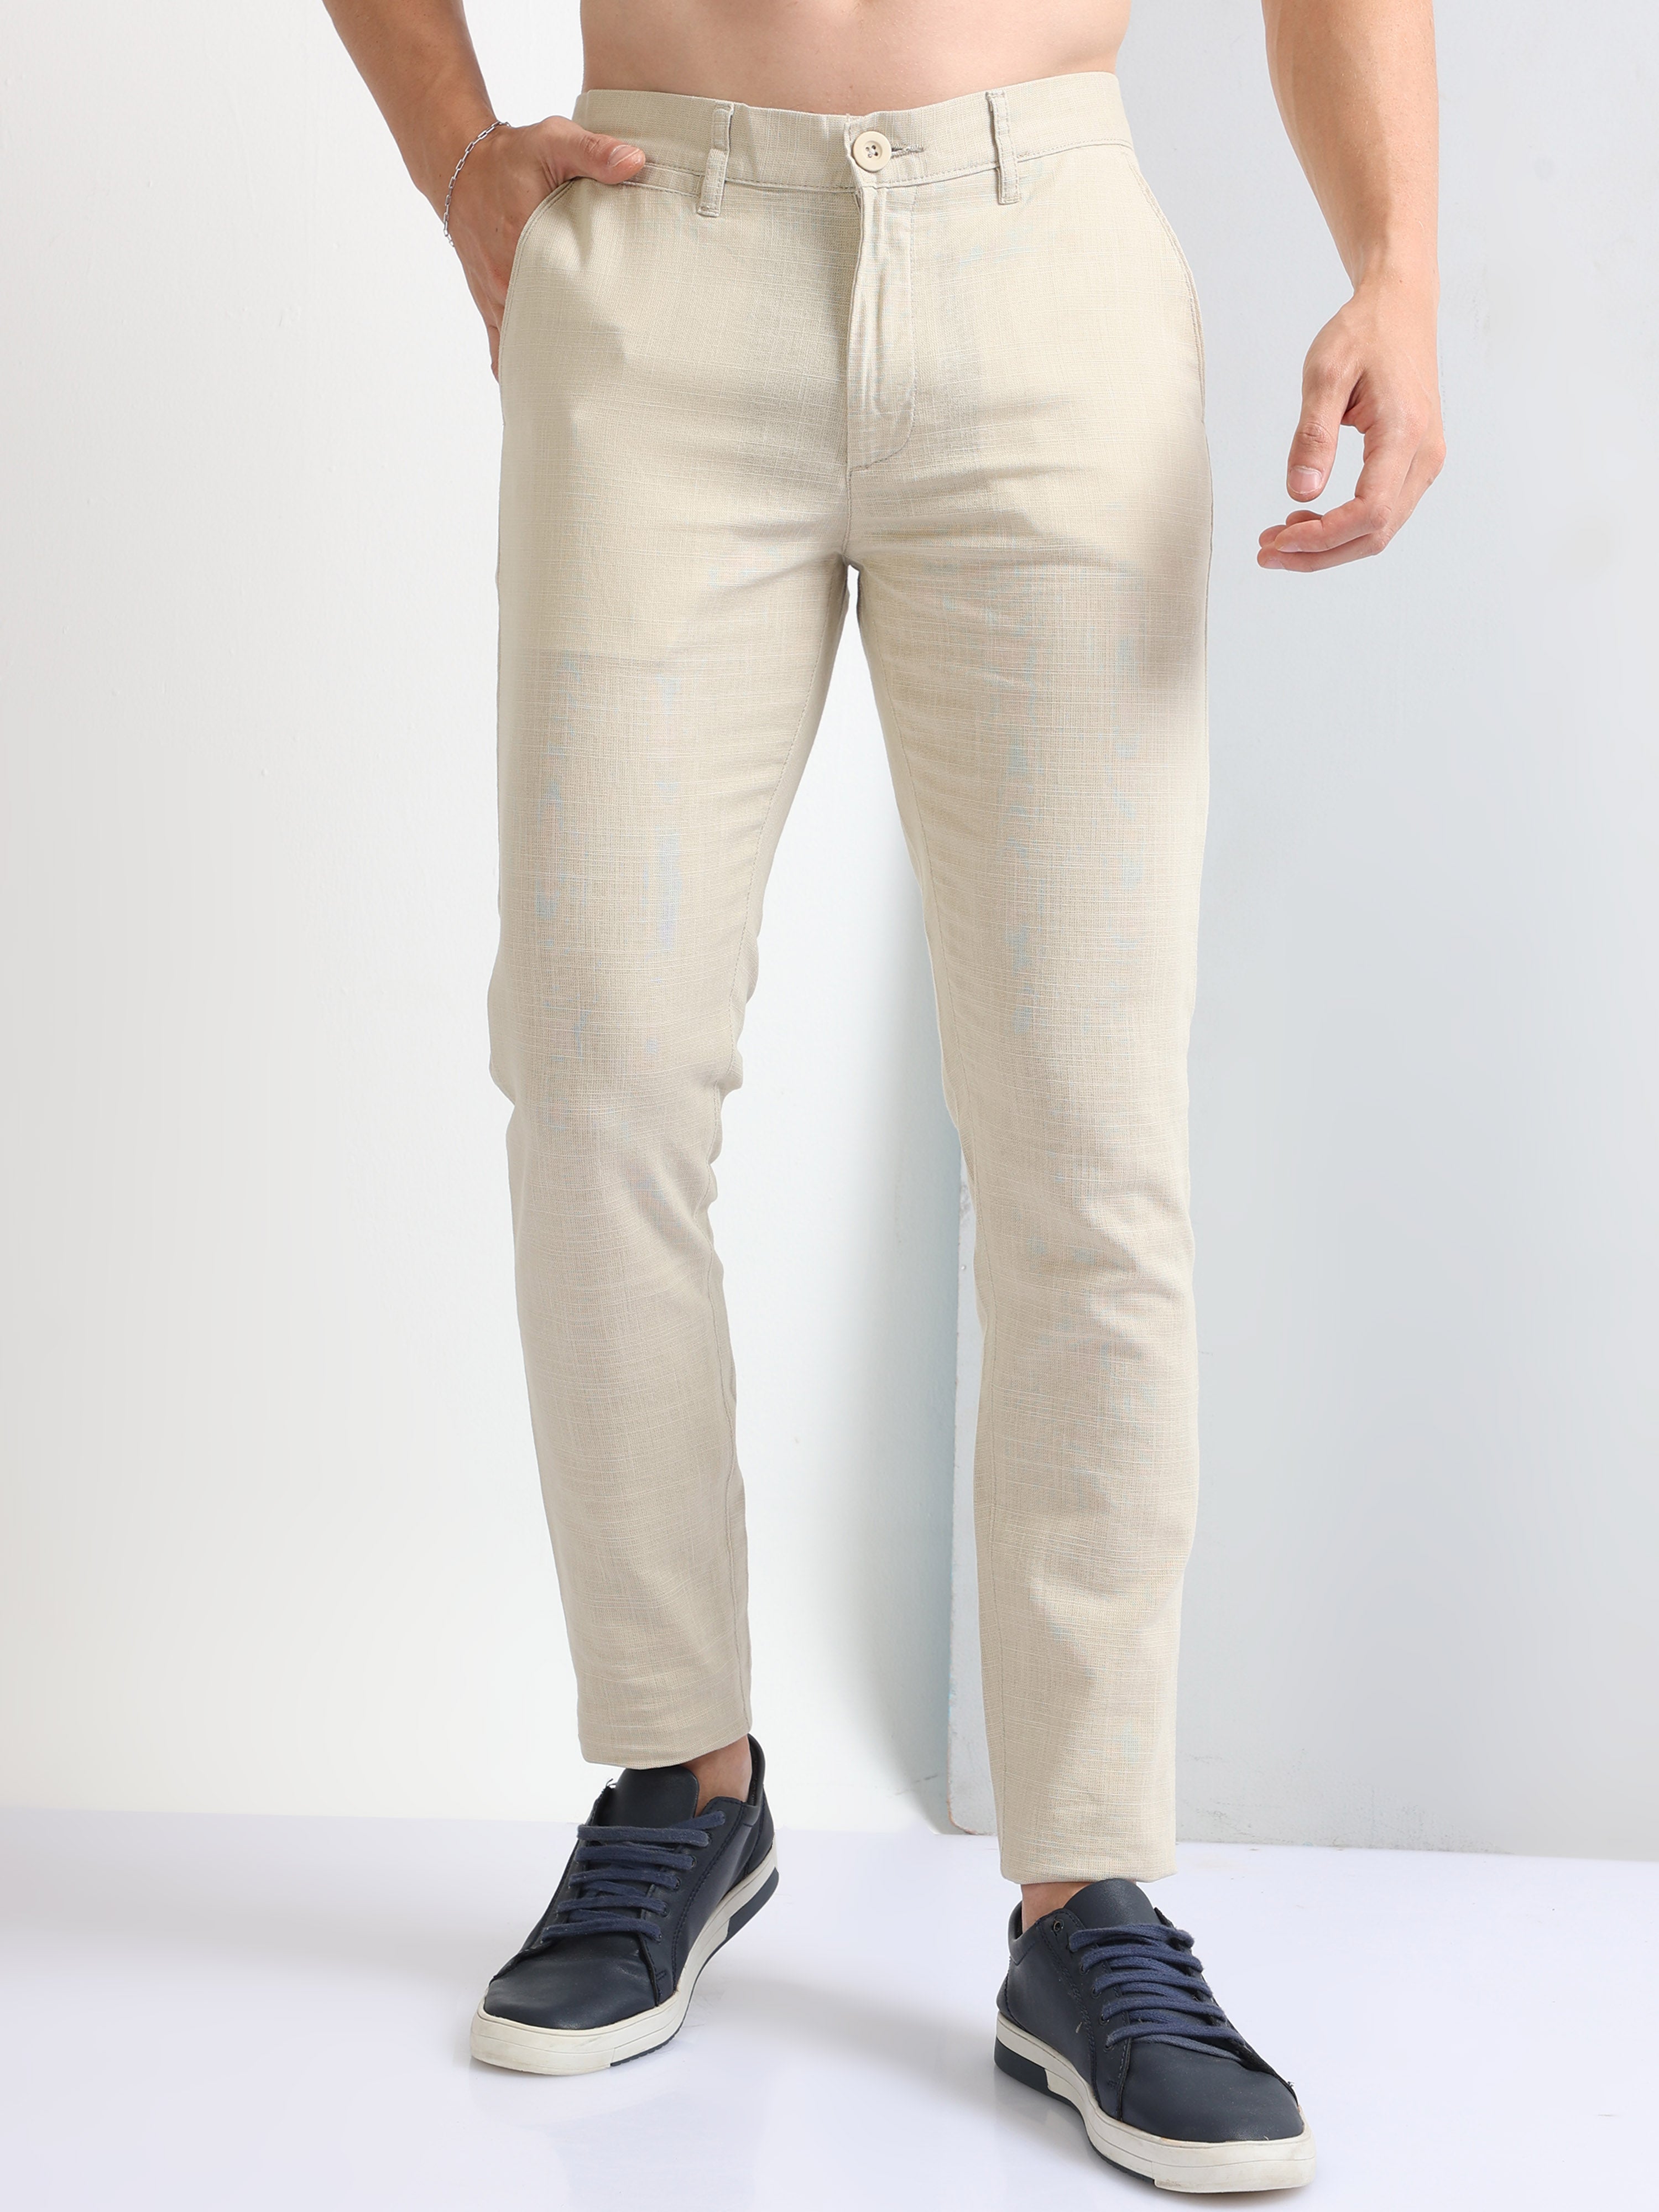 Skinny Pants for Men - 30% OFF Everything KSA - GAP